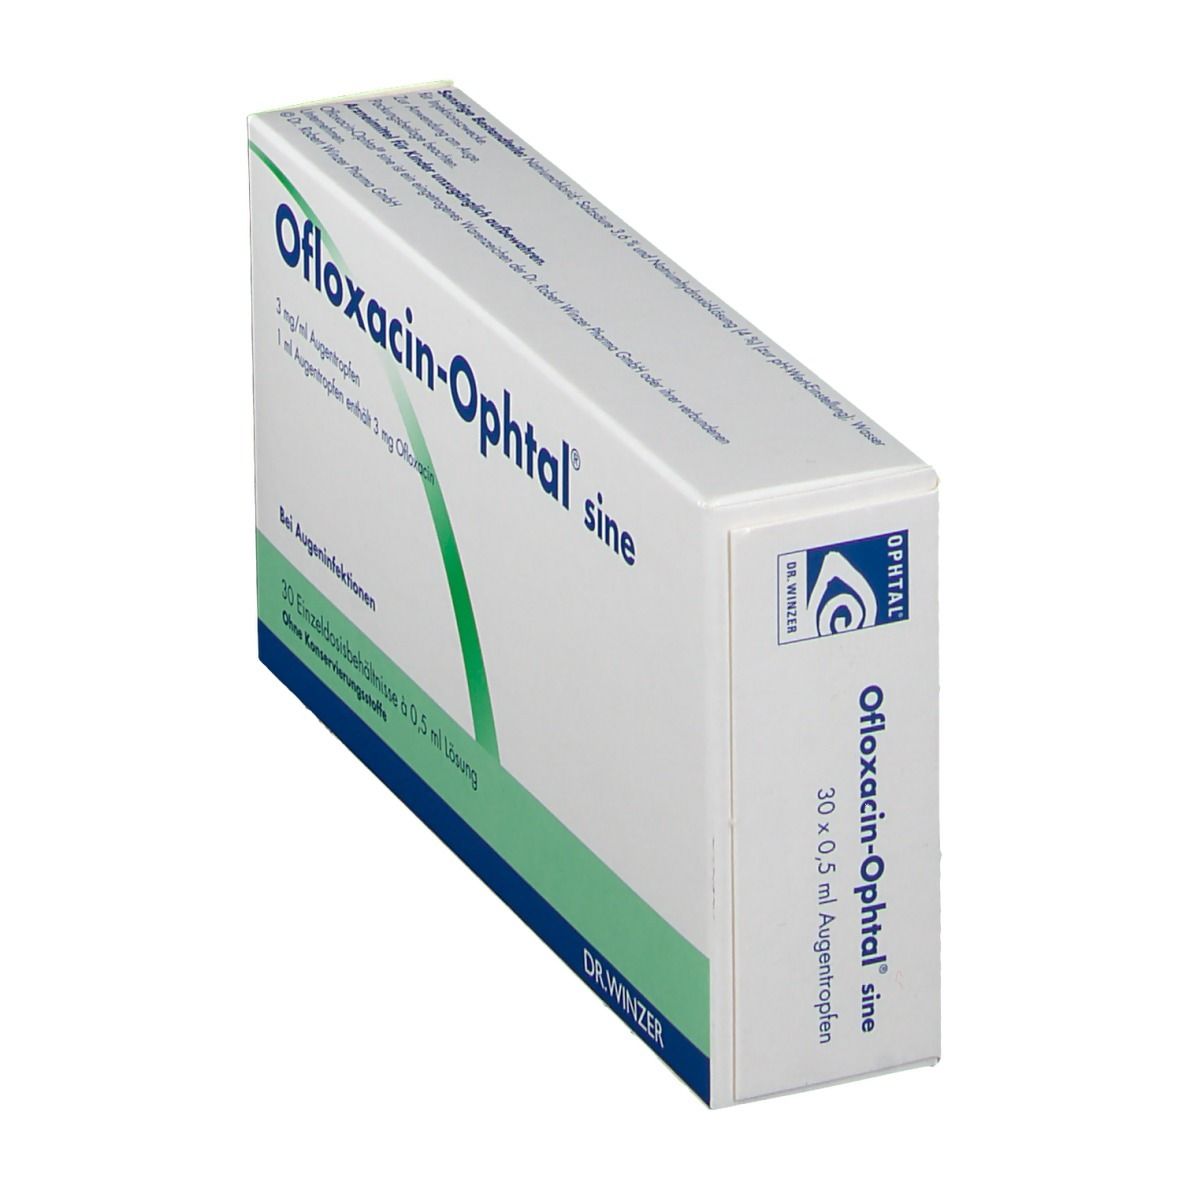 Ofloxacin-Ophtal® sine 3 mg/ml